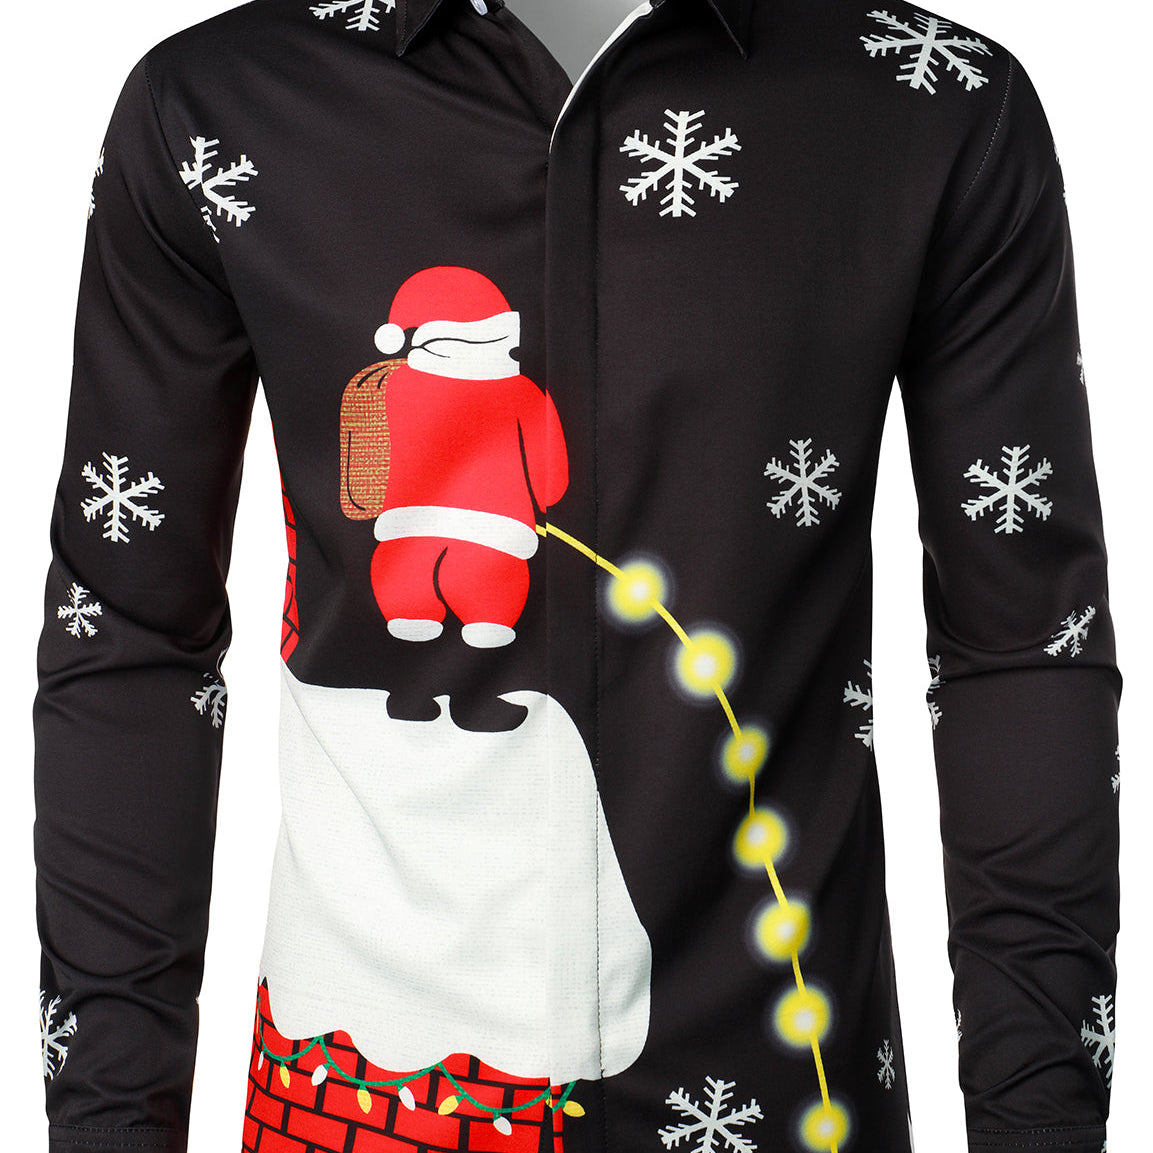 Men's Christmas Santa Button Up Black Novelty Long Sleeve Shirt